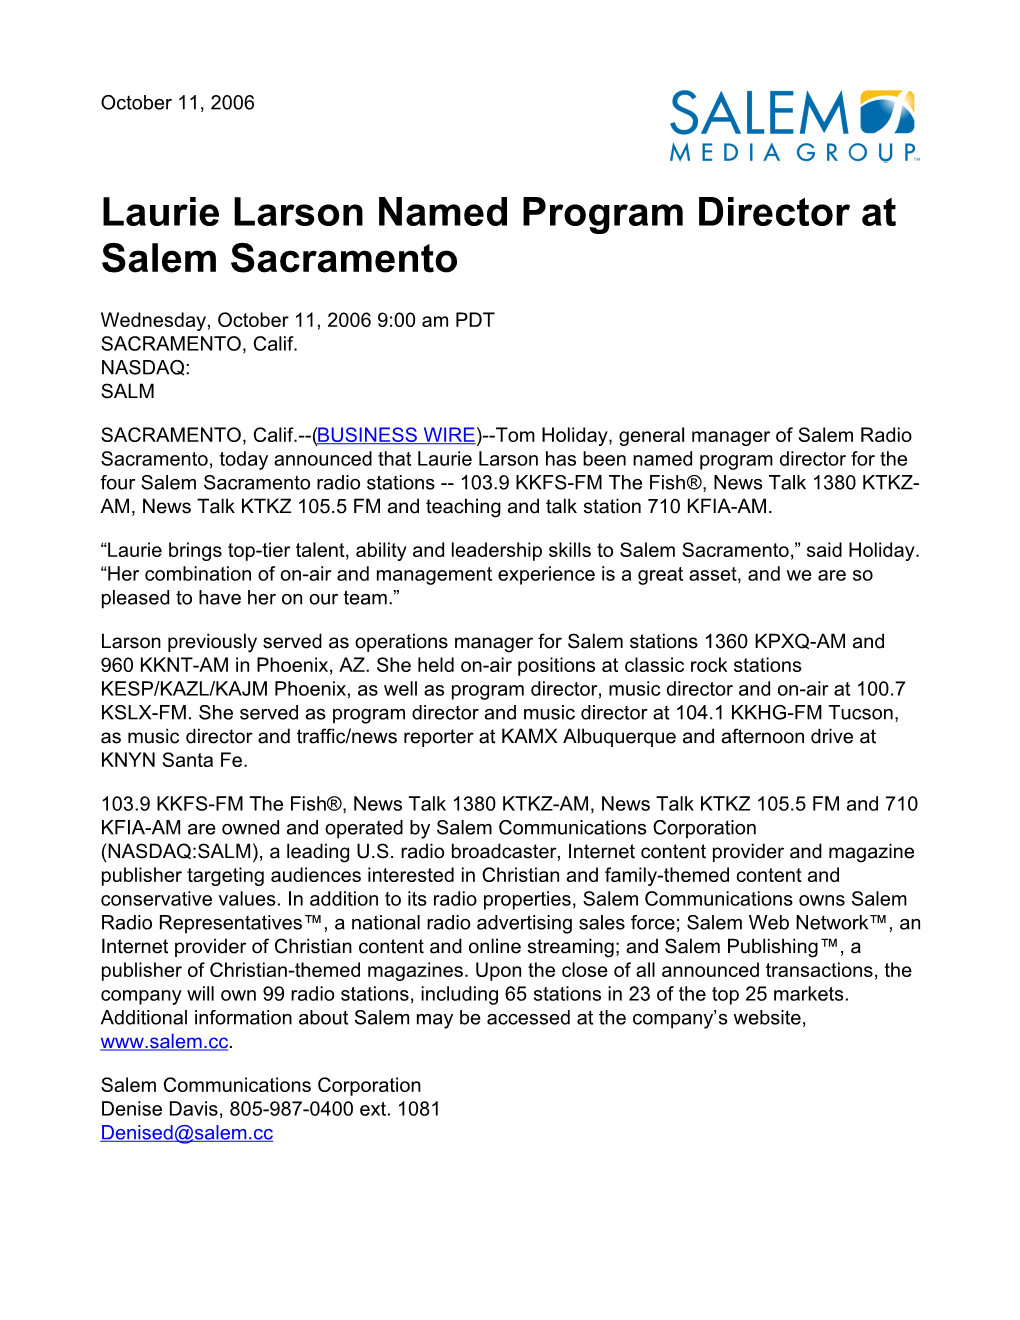 Laurie Larson Named Program Director at Salem Sacramento